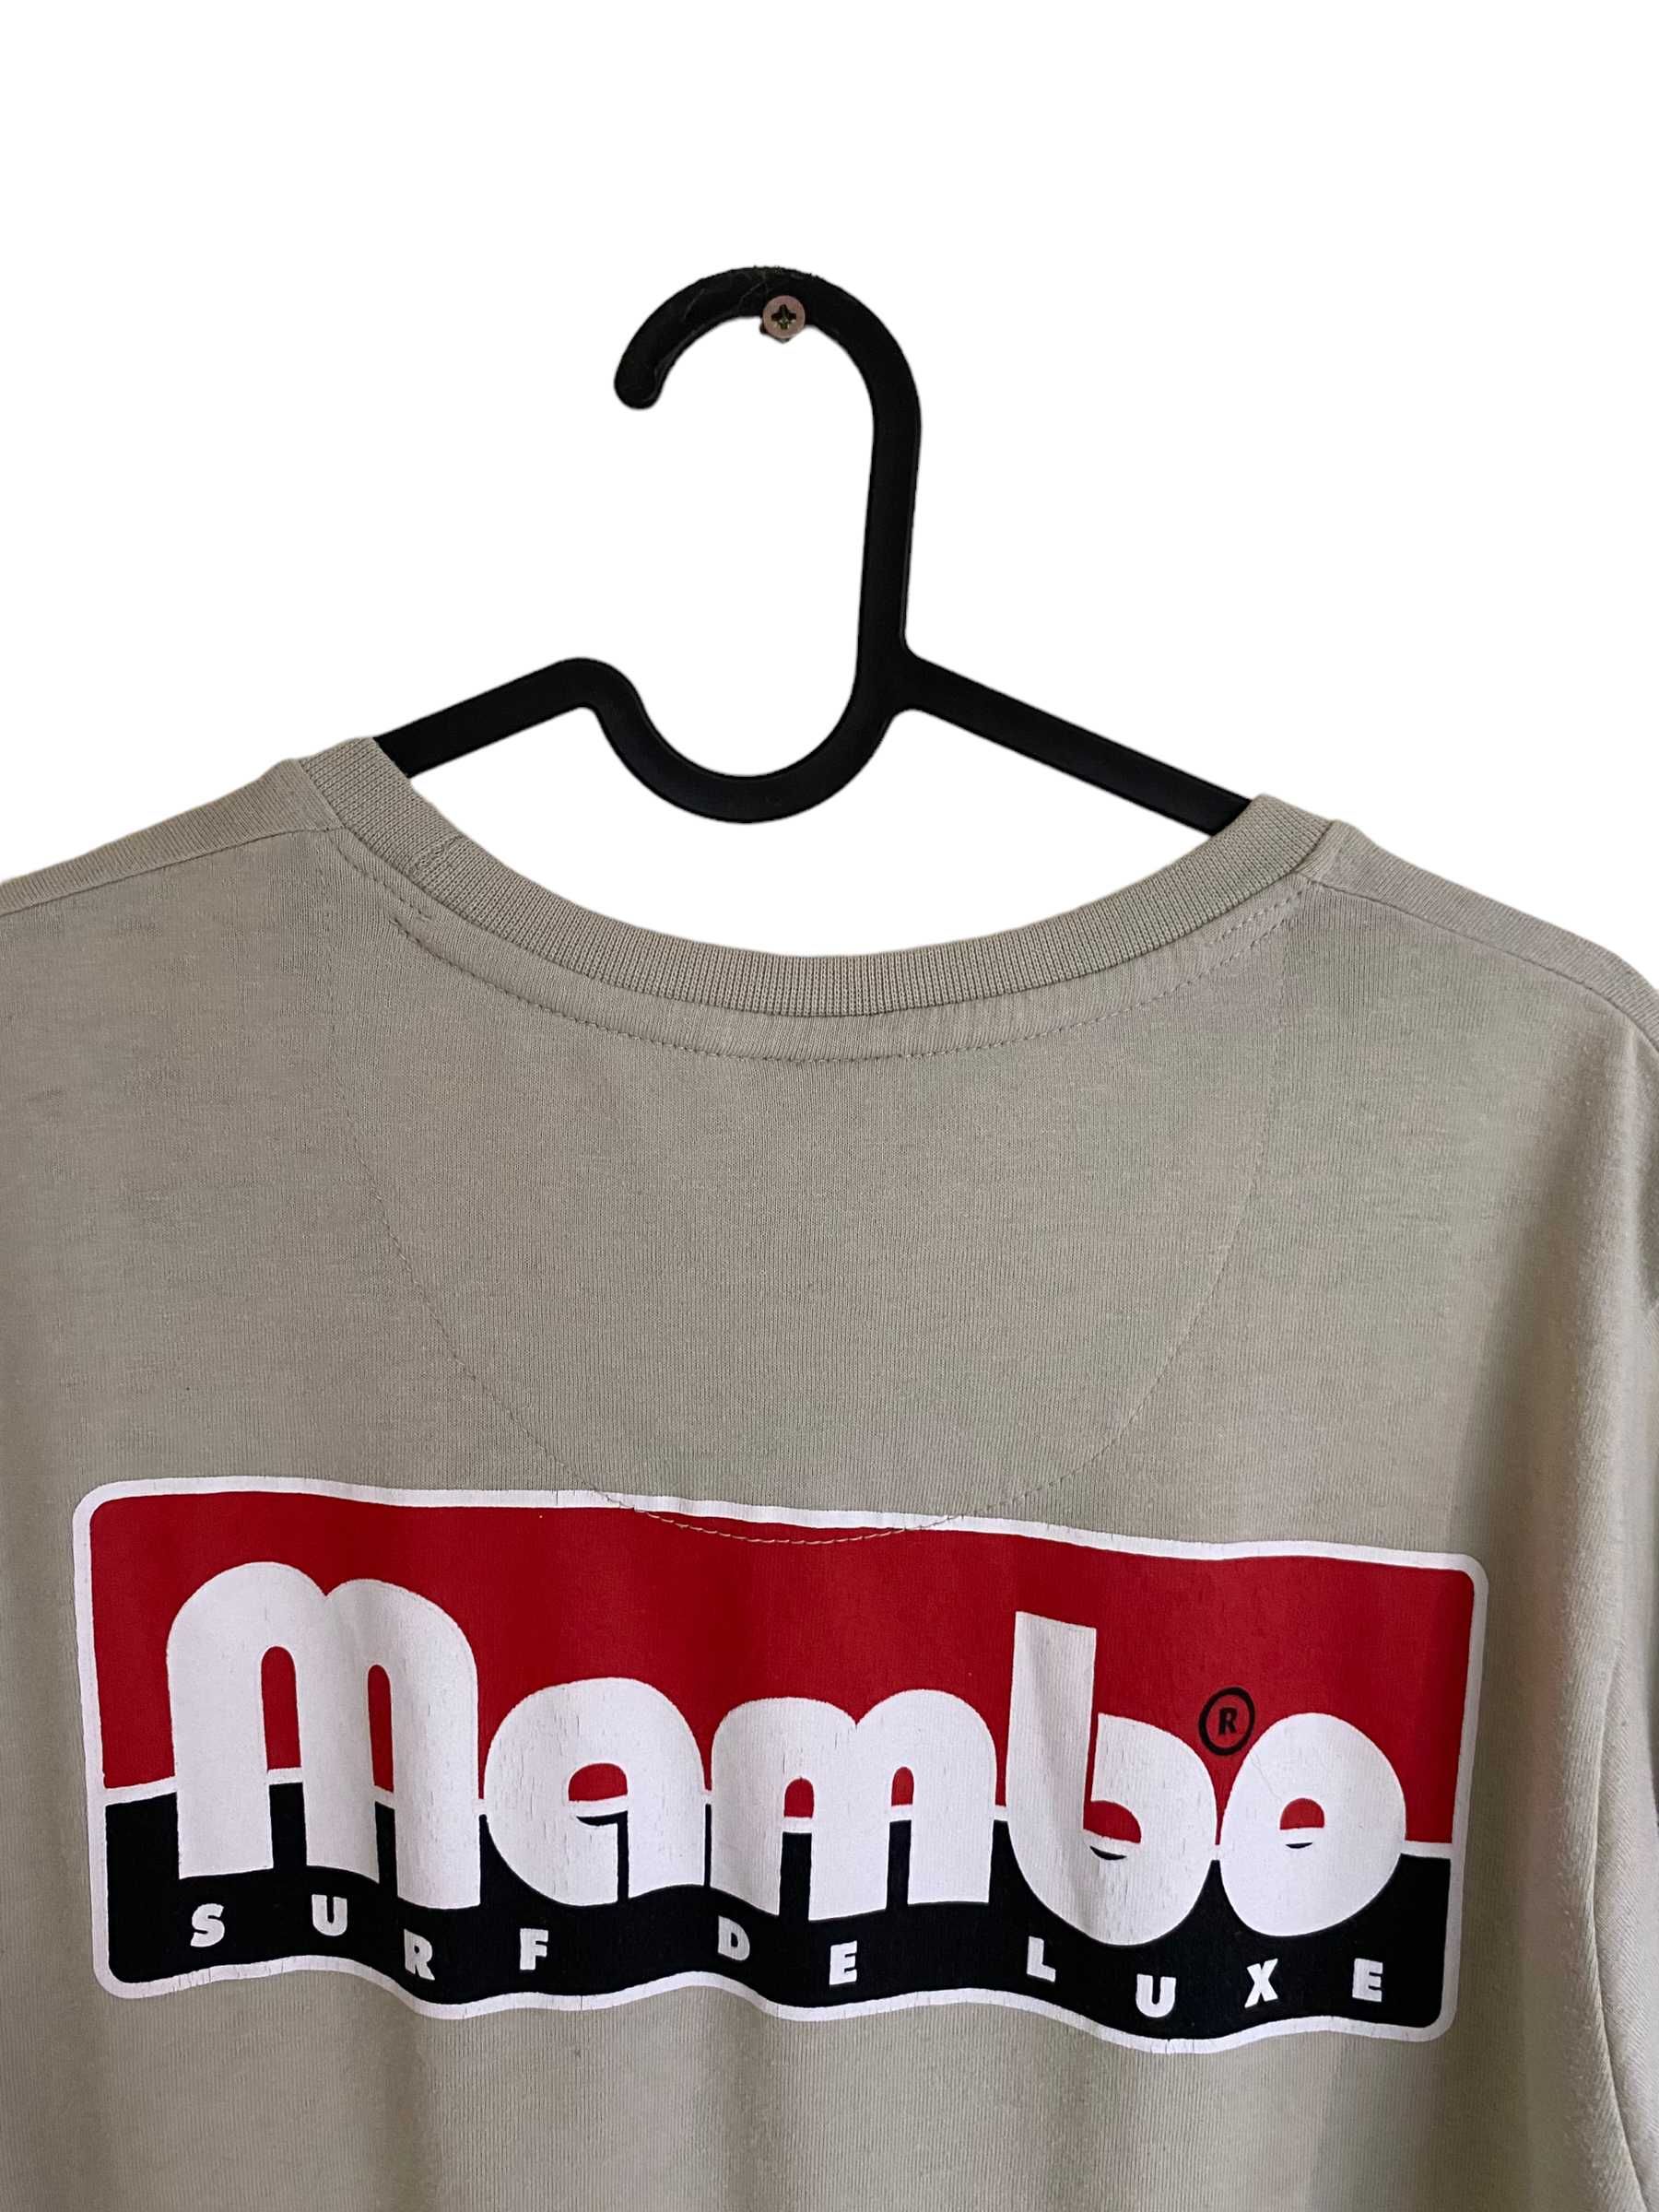 Mambo Australia t-shirt, rozmiar S, stan bardzo dobry